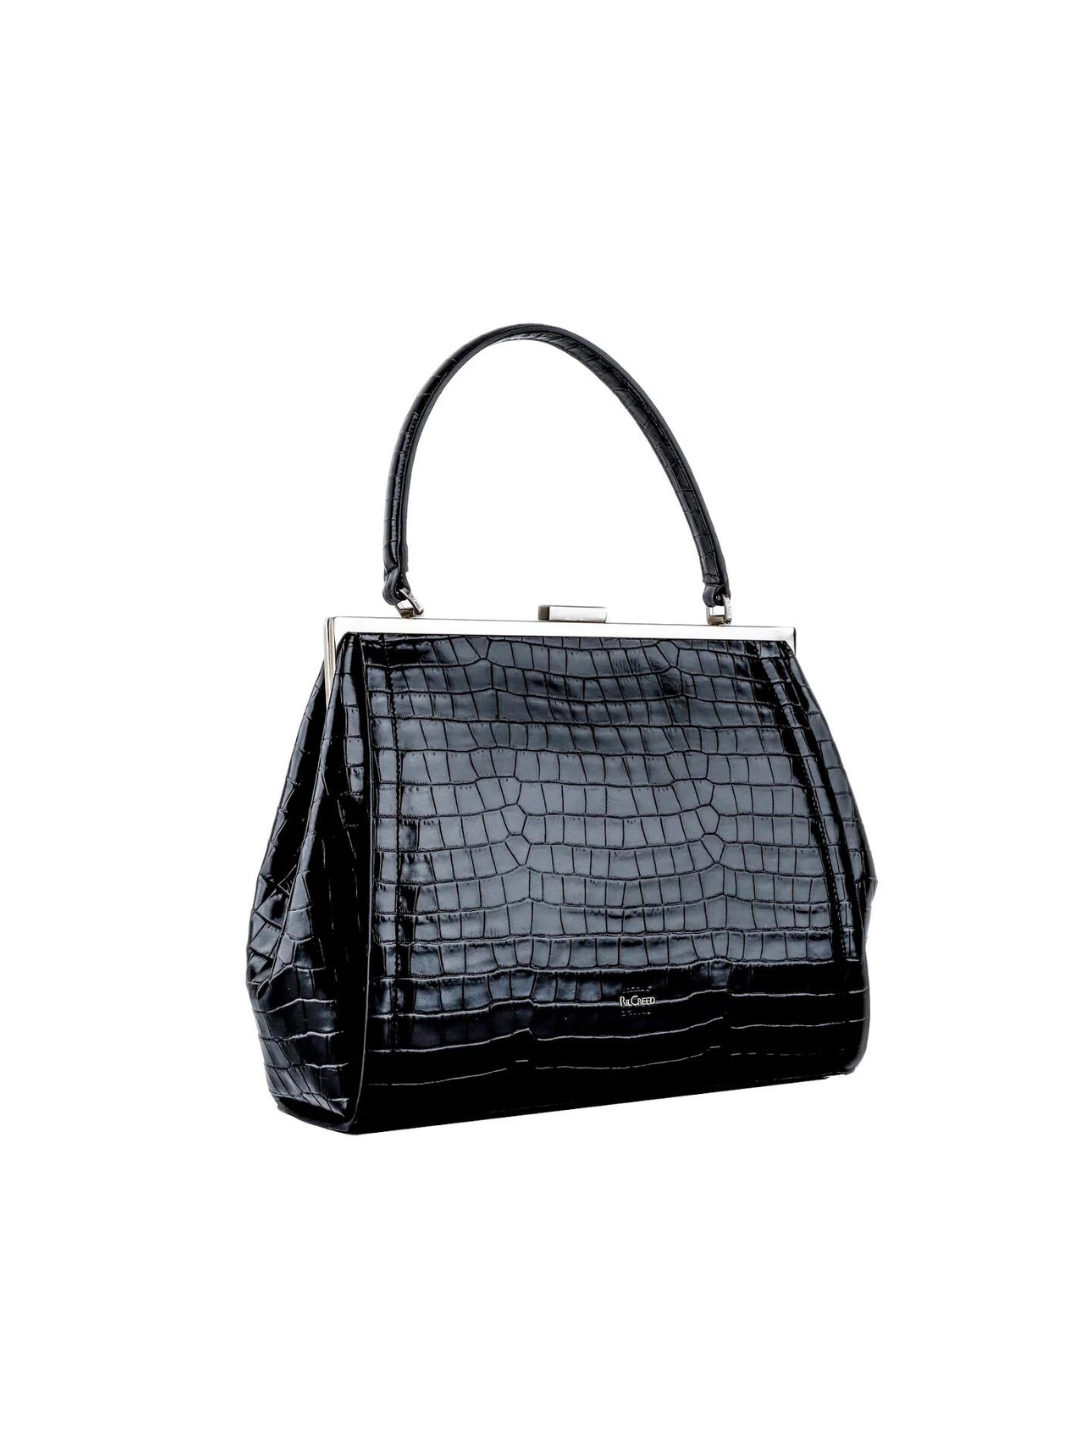 Celia bag genuine leather upcycled women's fashion shop sustainable